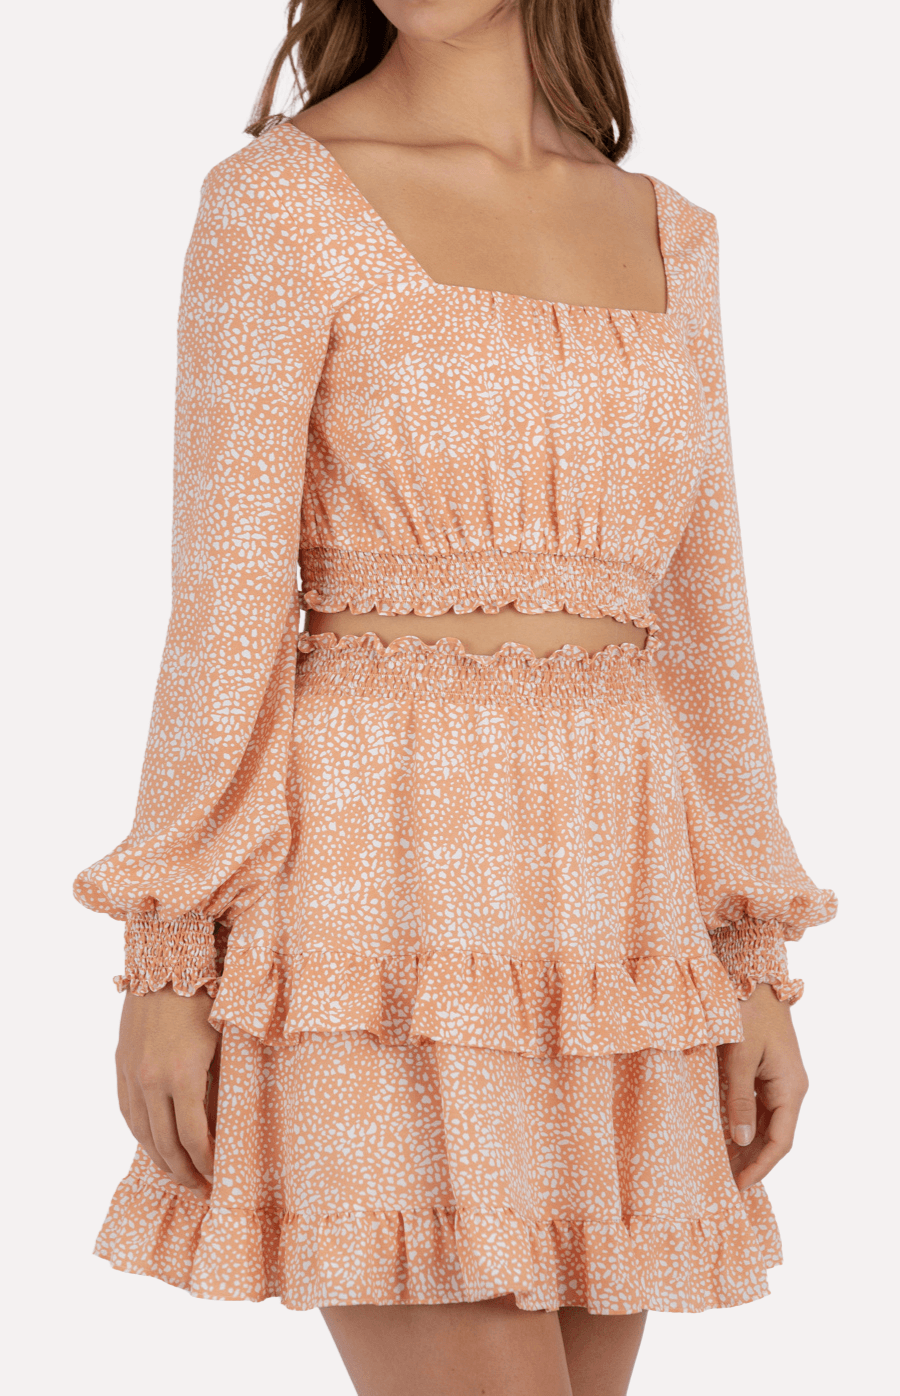 Zahara Mini Skirt in Spotted Peach - Ophelia Fox Boutique